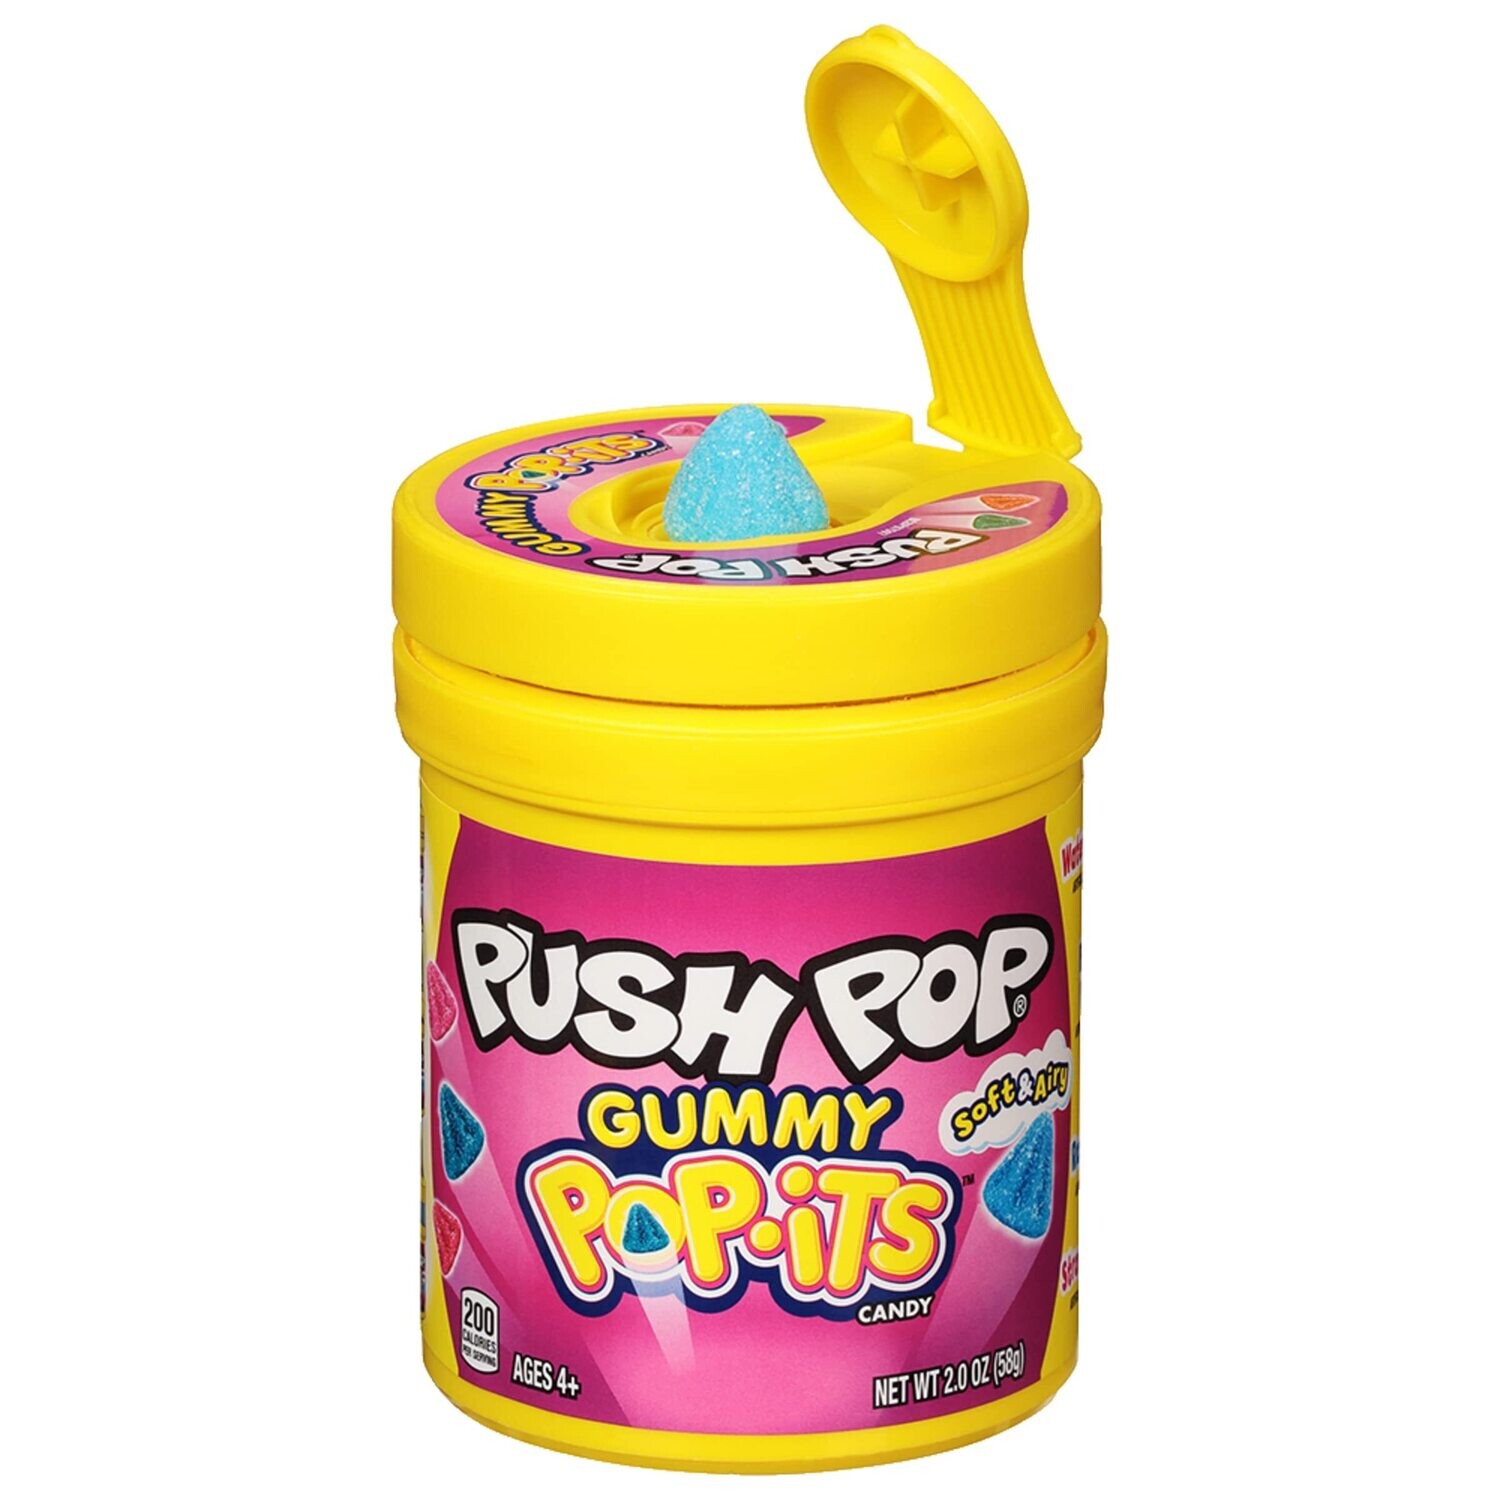 Push Pop Gummy Pop its 1ct